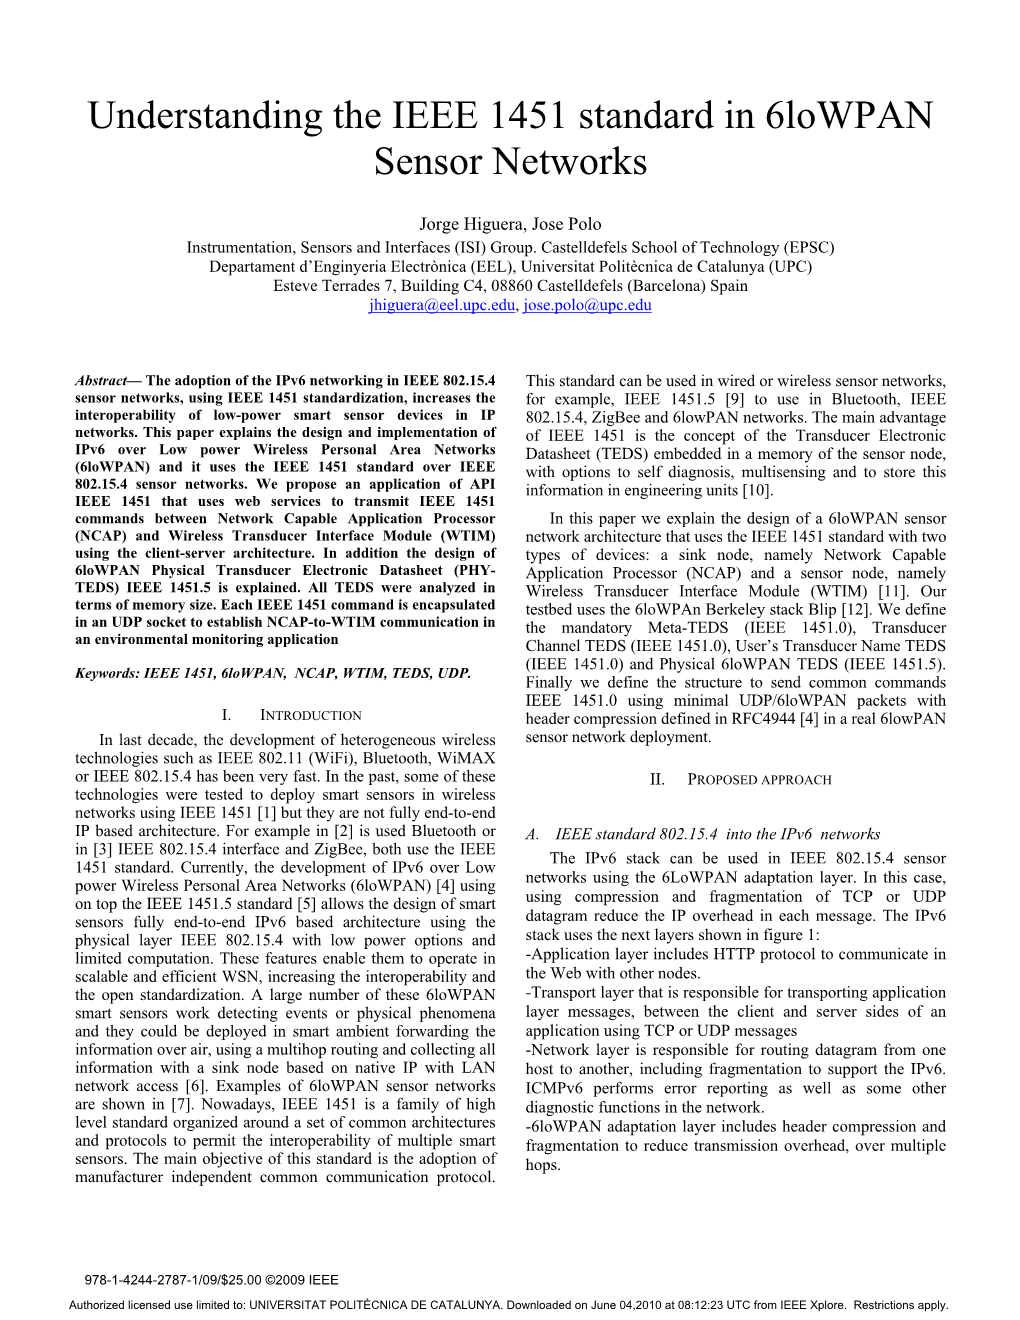 Understanding the IEEE 1451 Standard in 6Lowpan Sensor Networks